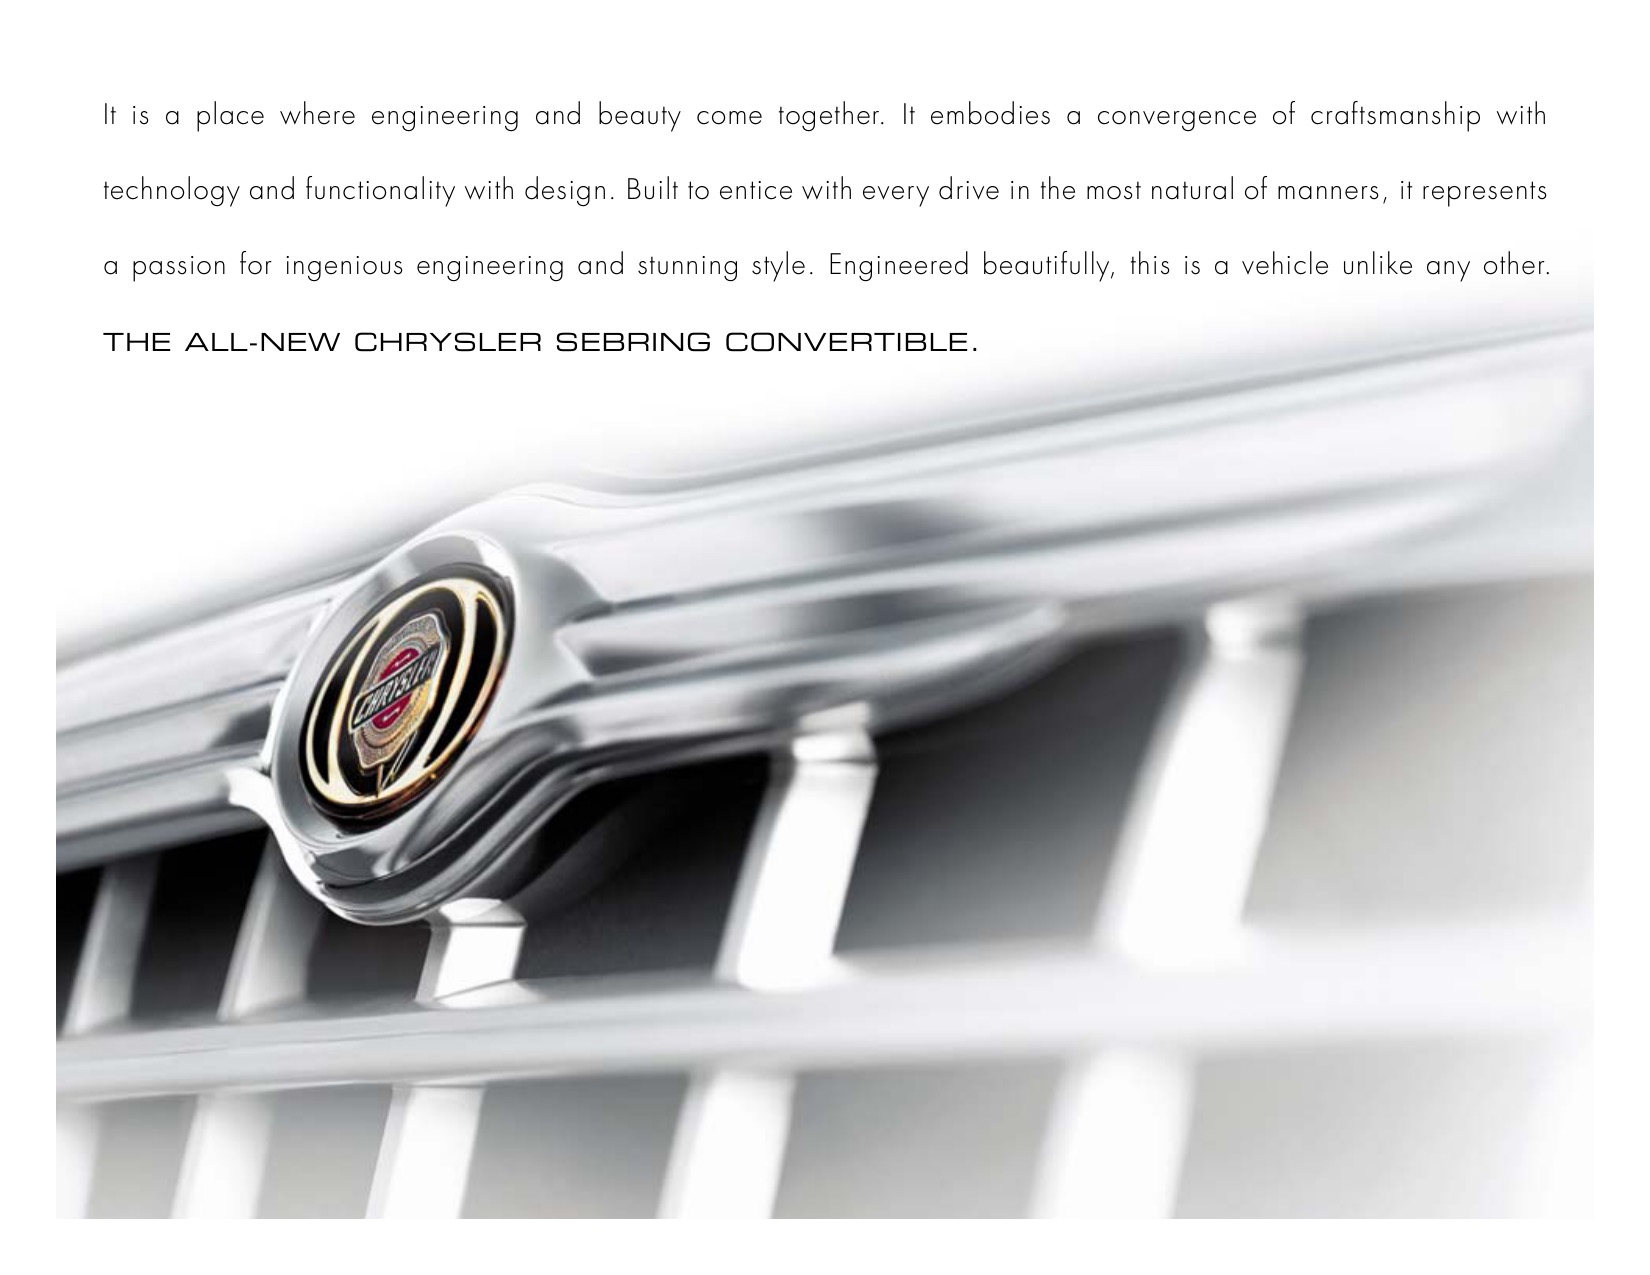 2008 Chrysler Sebring Convertible Brochure Page 16